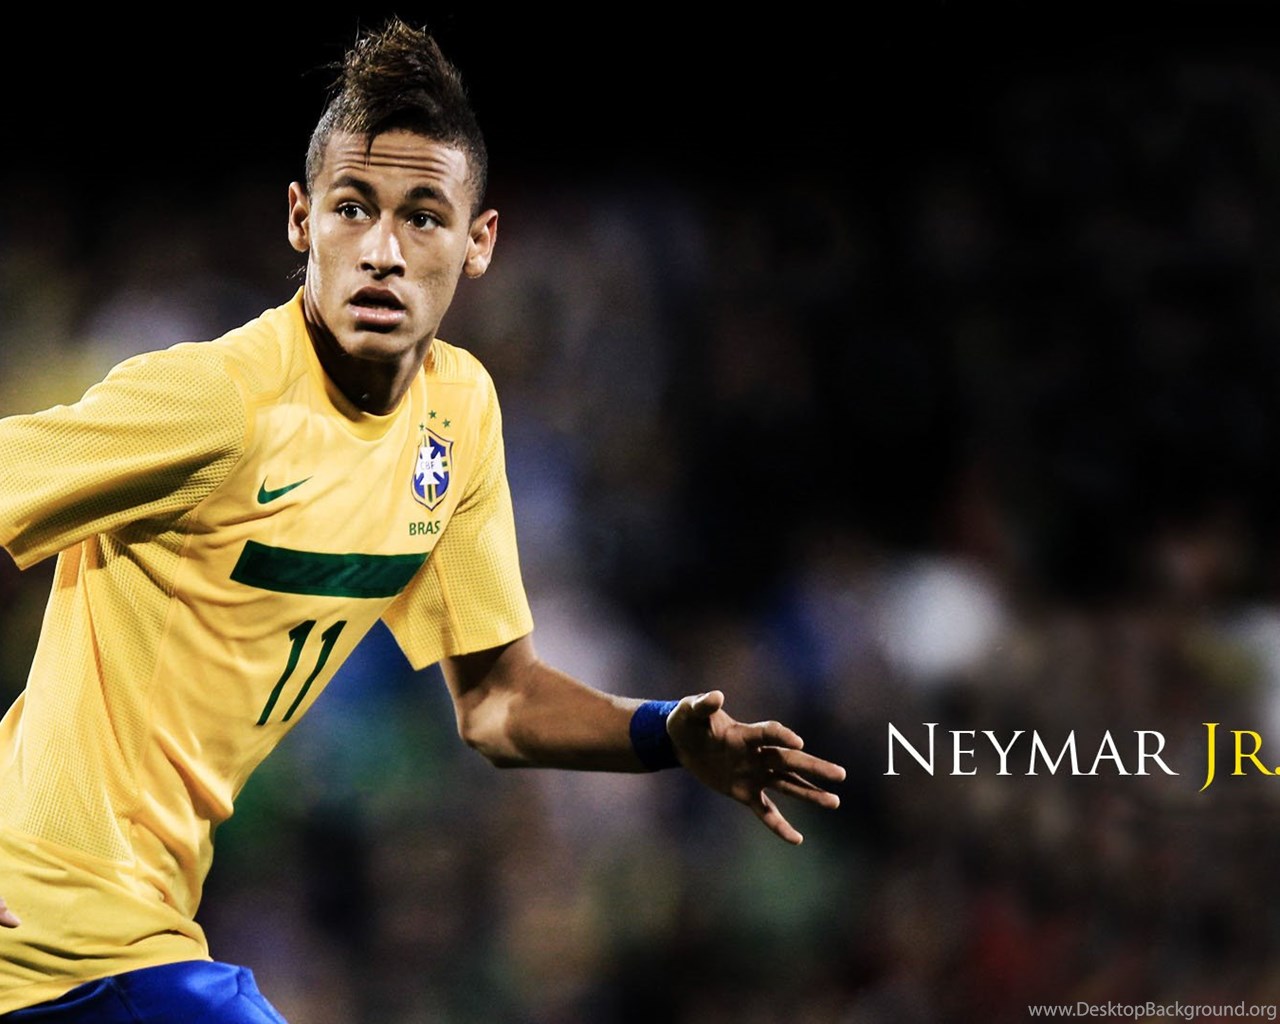 FIFA Neymar Jr In Yellow Jersey Wallpaper Desktop Background